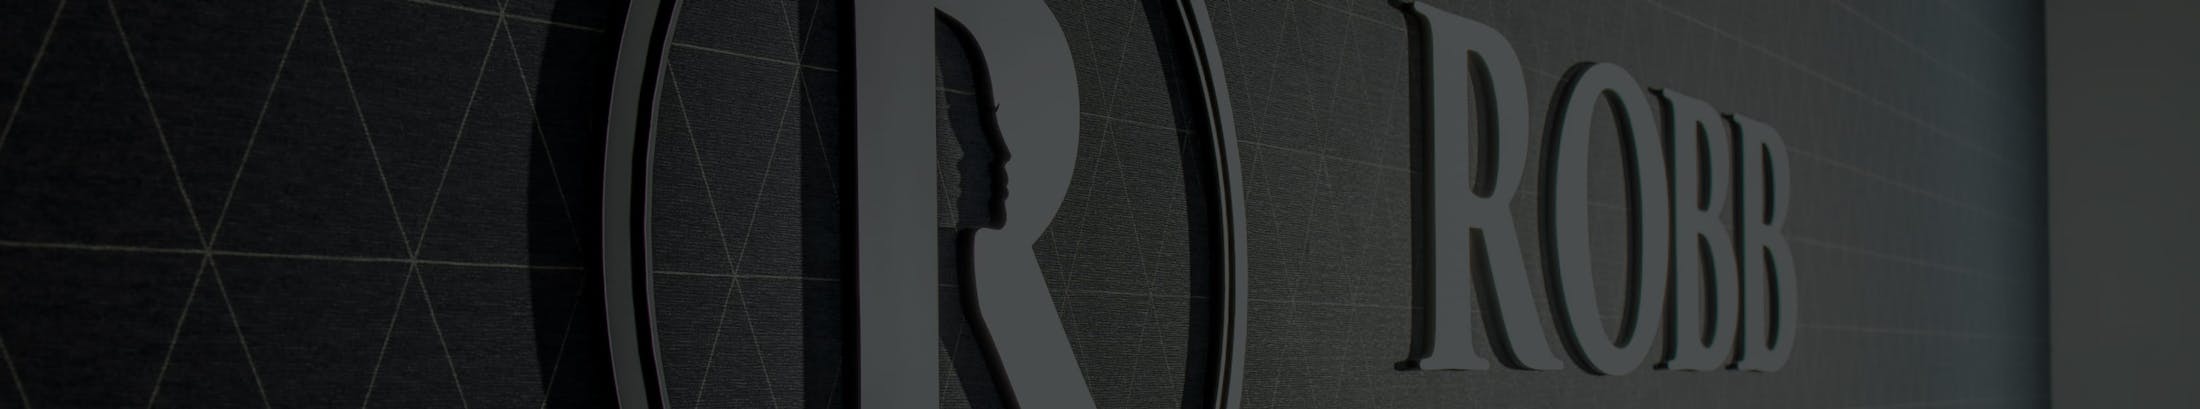 a thin image of Robb Facial Plastic Surgery & Aesthetics logo